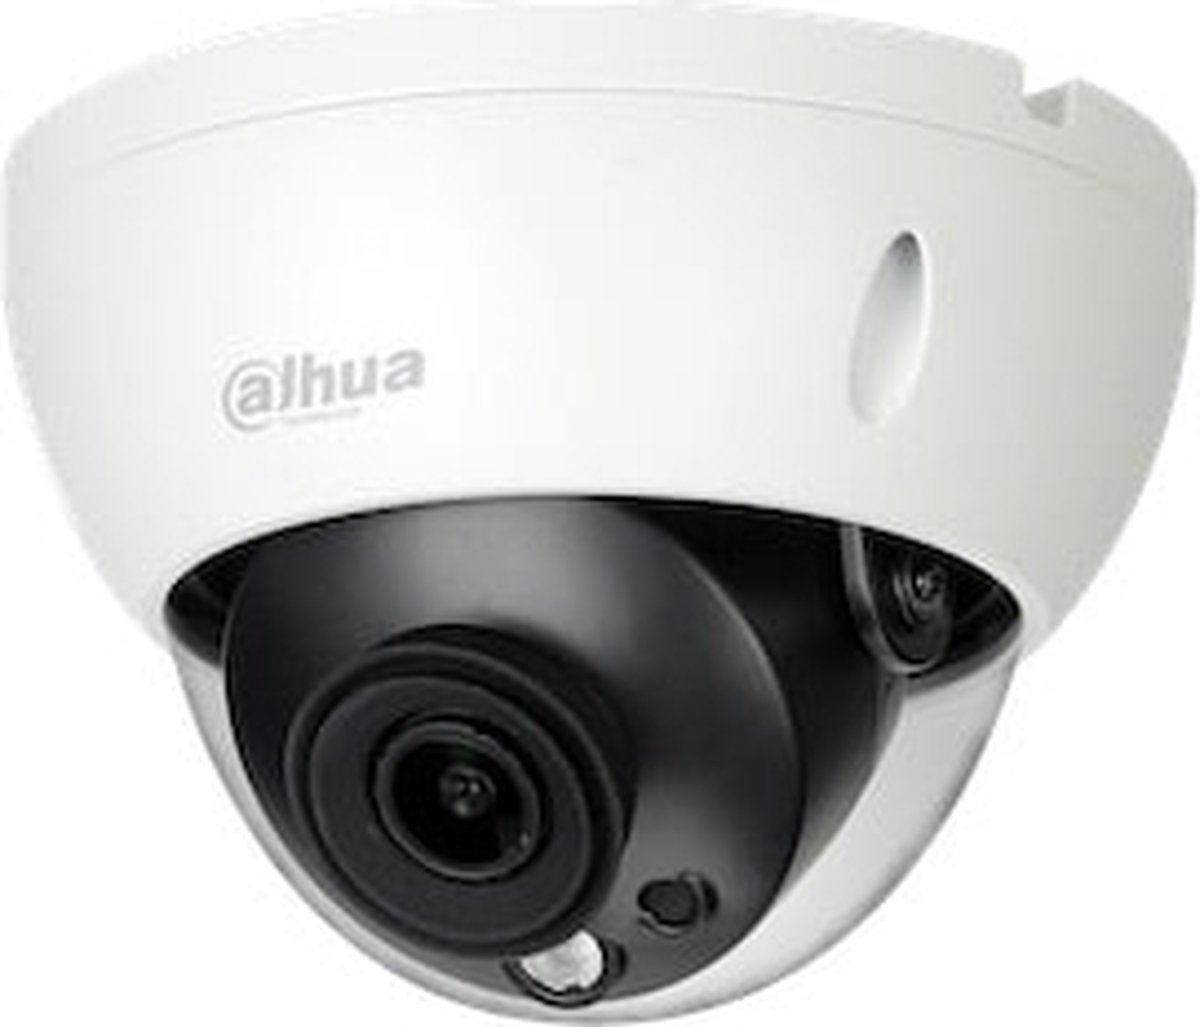 Dahua IPC-HDBW5442R-ASE Full HD 4MP Pro AI buiten dome camera 2.8mm met IR nachtzicht, SD slot en 140dB WDR - Beveiligingscamera IP camera bewakingscamera camerabewaking veiligheidscamera beveiliging netwerk camera webcam